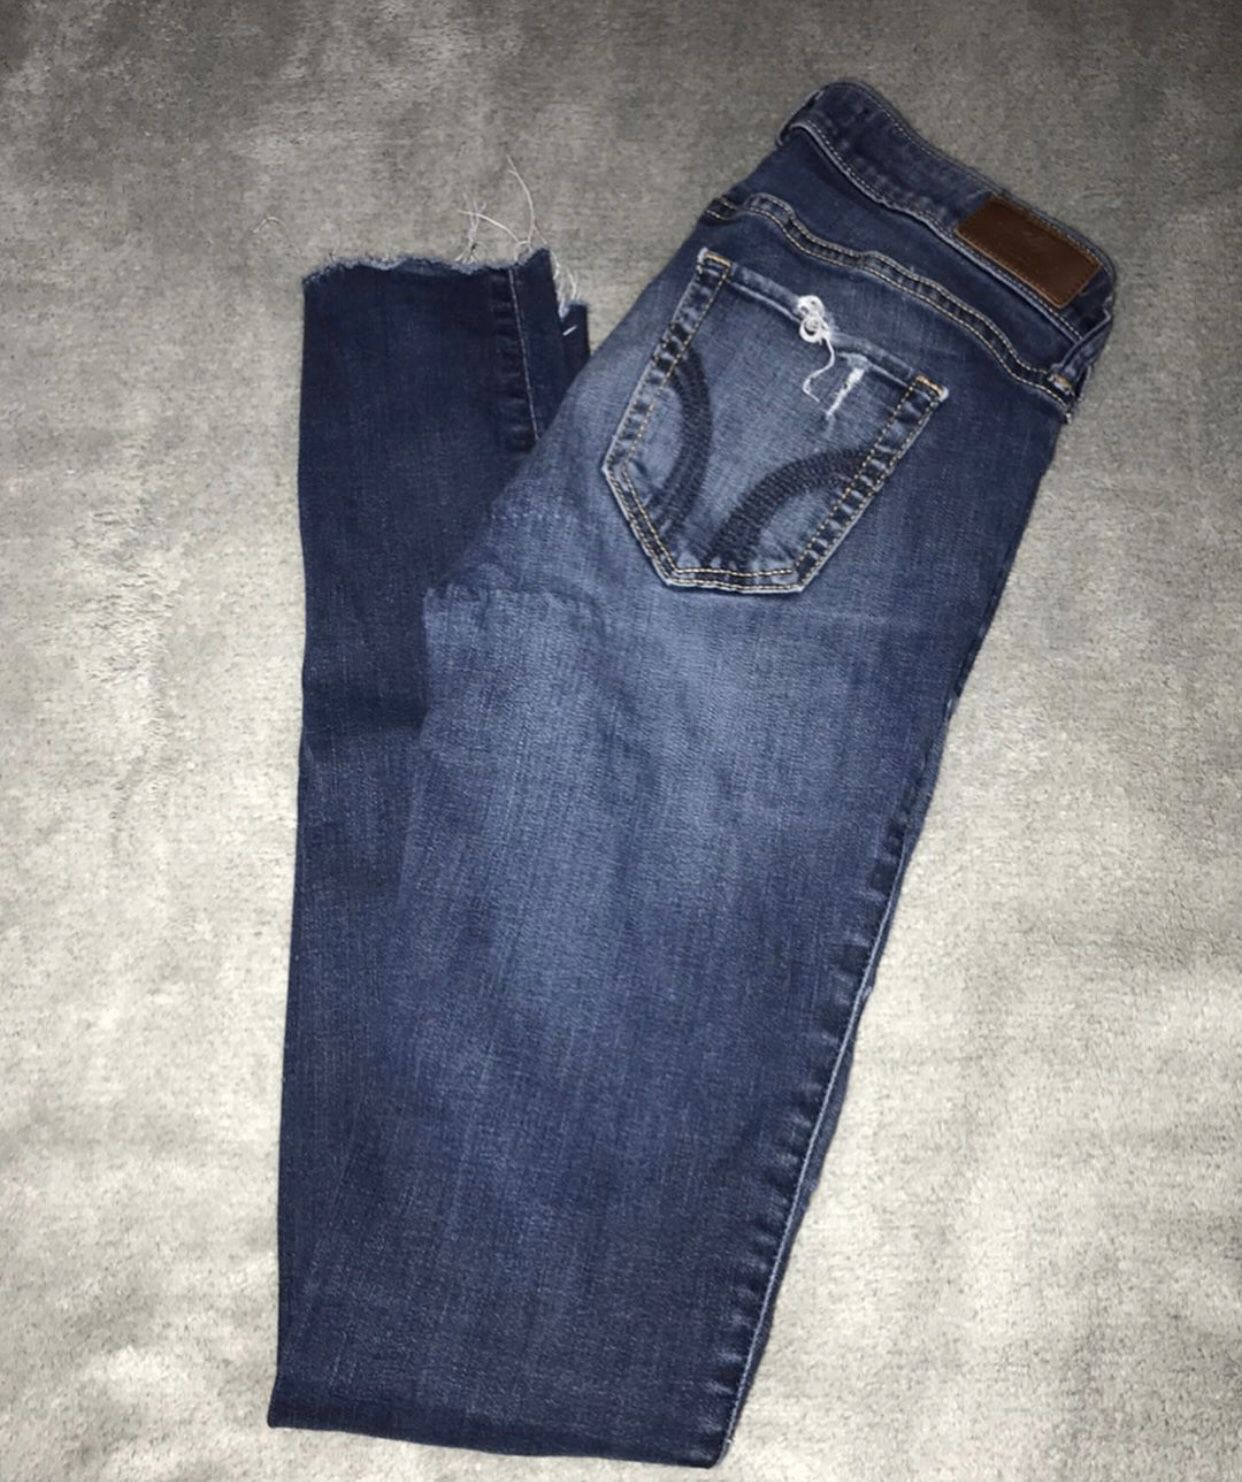 hollister jeans size 3L low rise, super skinny